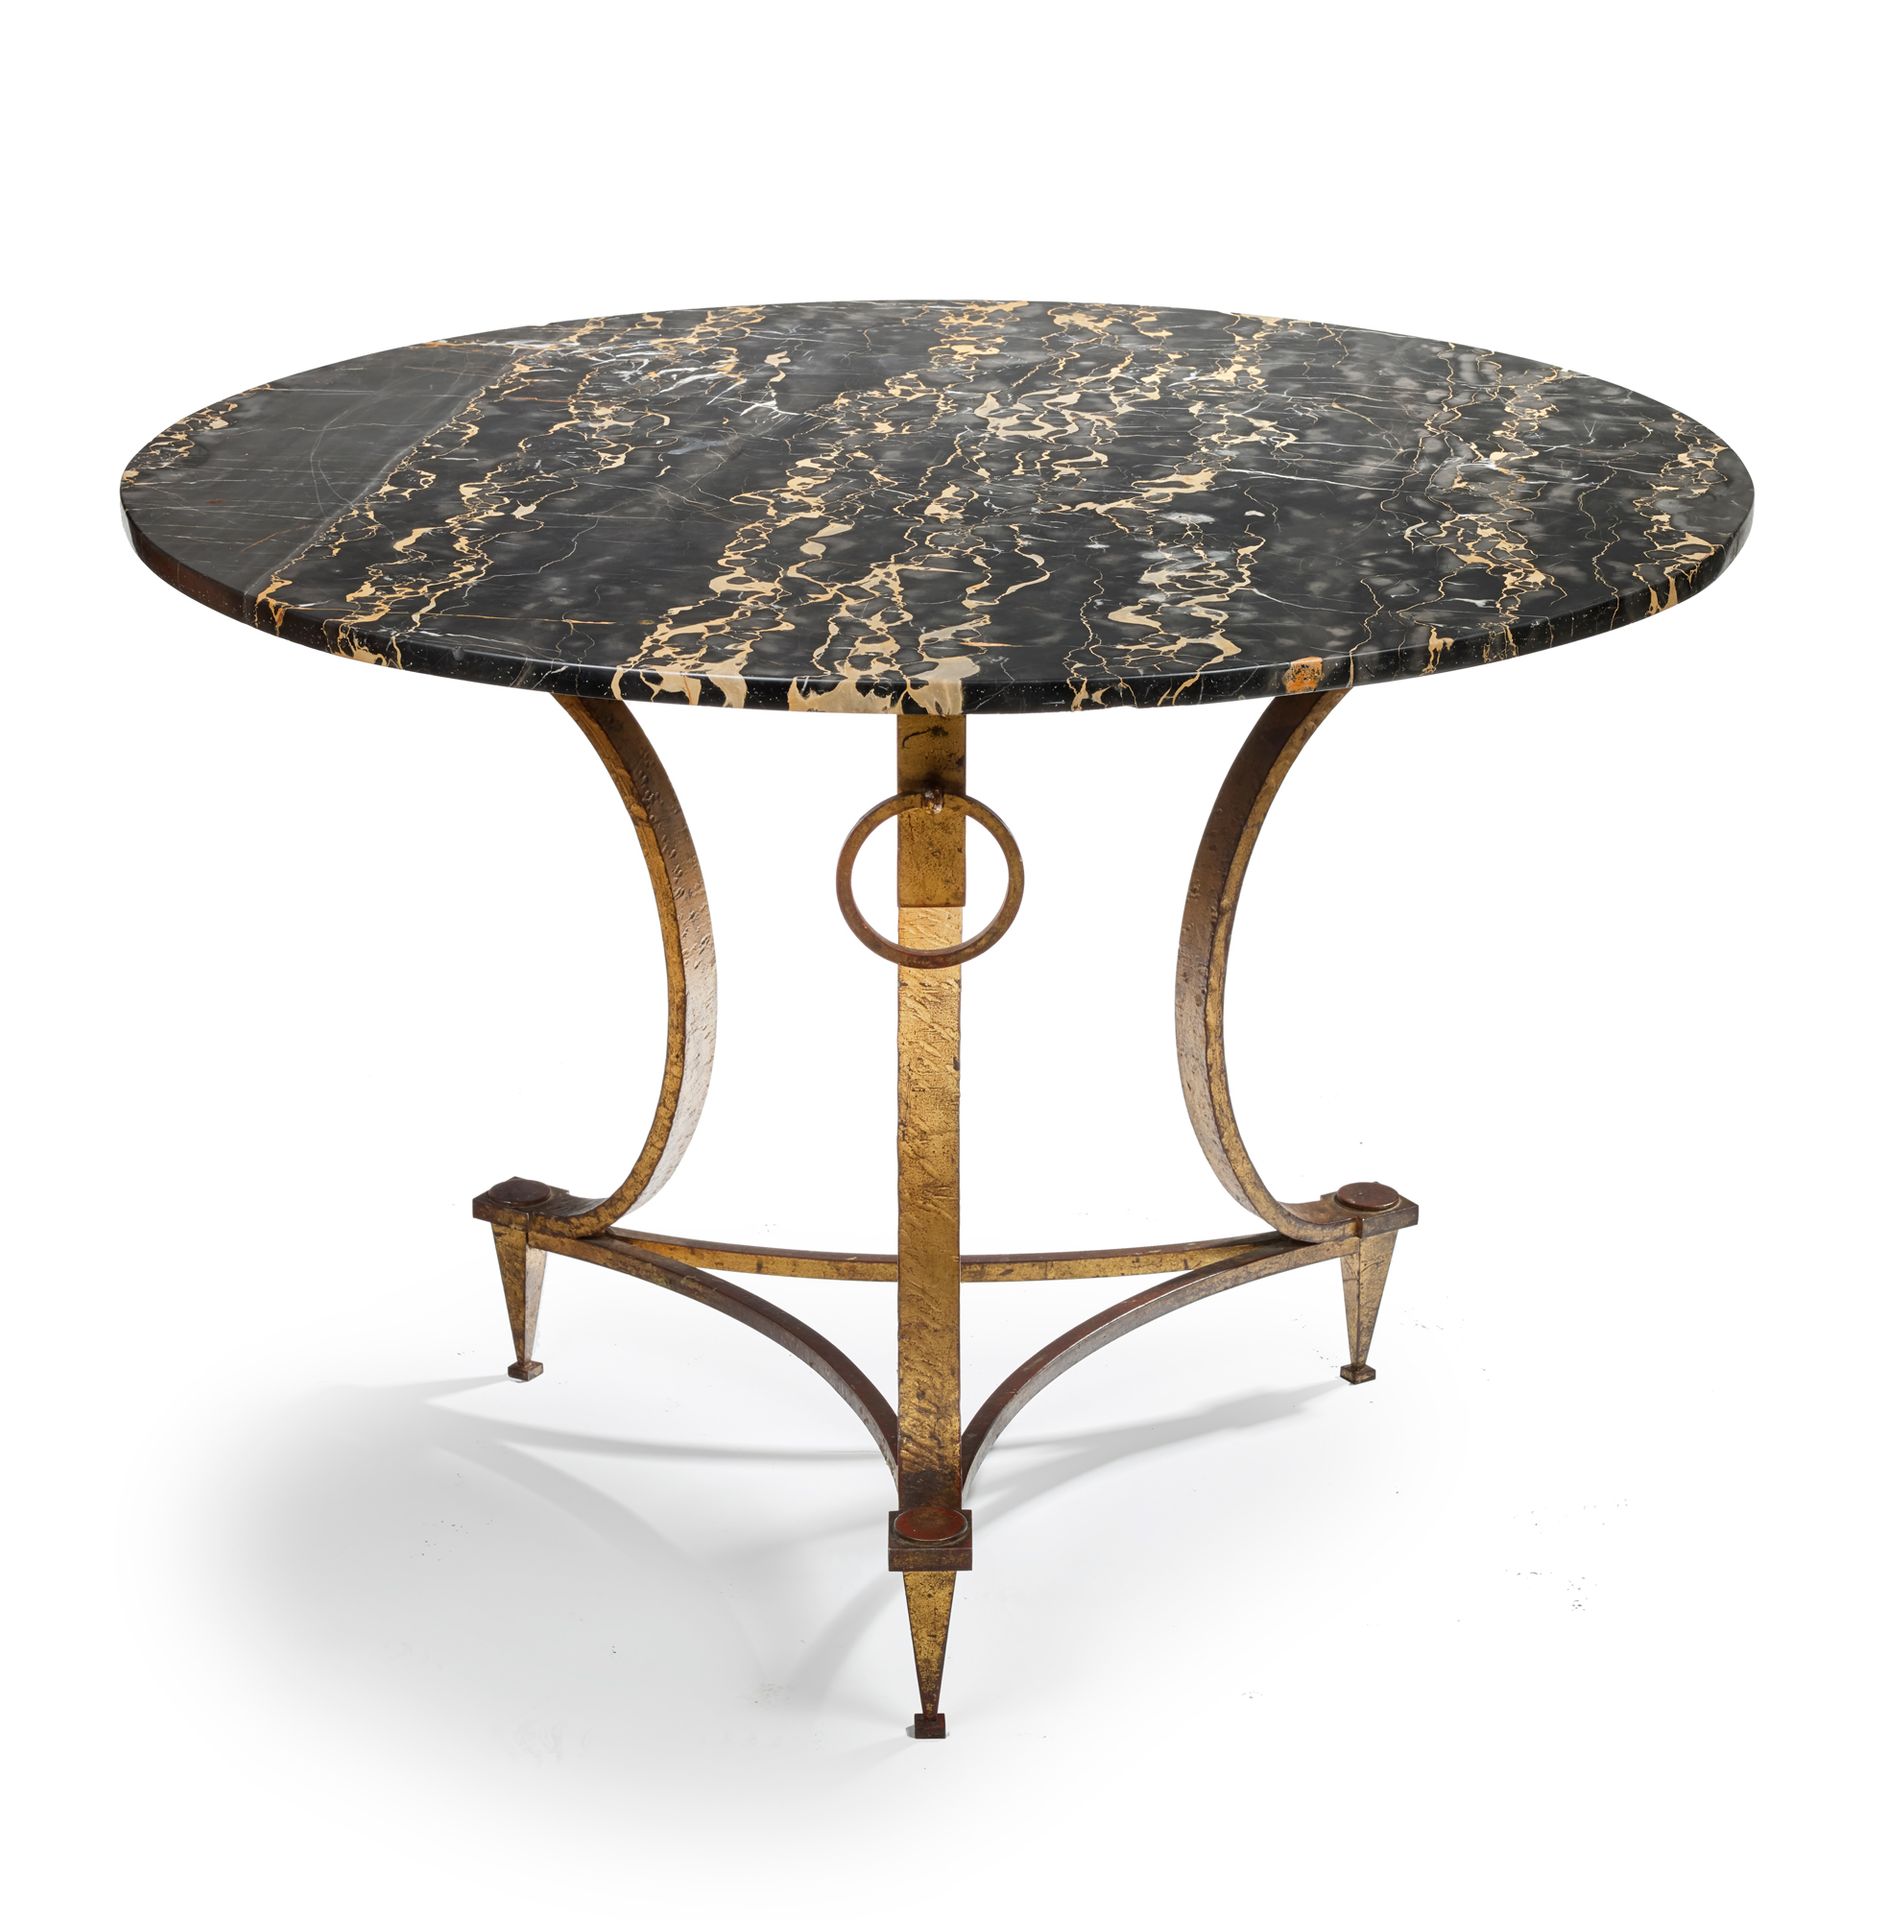 Maison RAMSAY 台阶式桌子，圆形桌面放在一个弯曲的三脚架底座上，底座上装有镀金的锻铁环，并由一个凹形隔板连接
大理石桌面。
1940年左右
高：10&hellip;